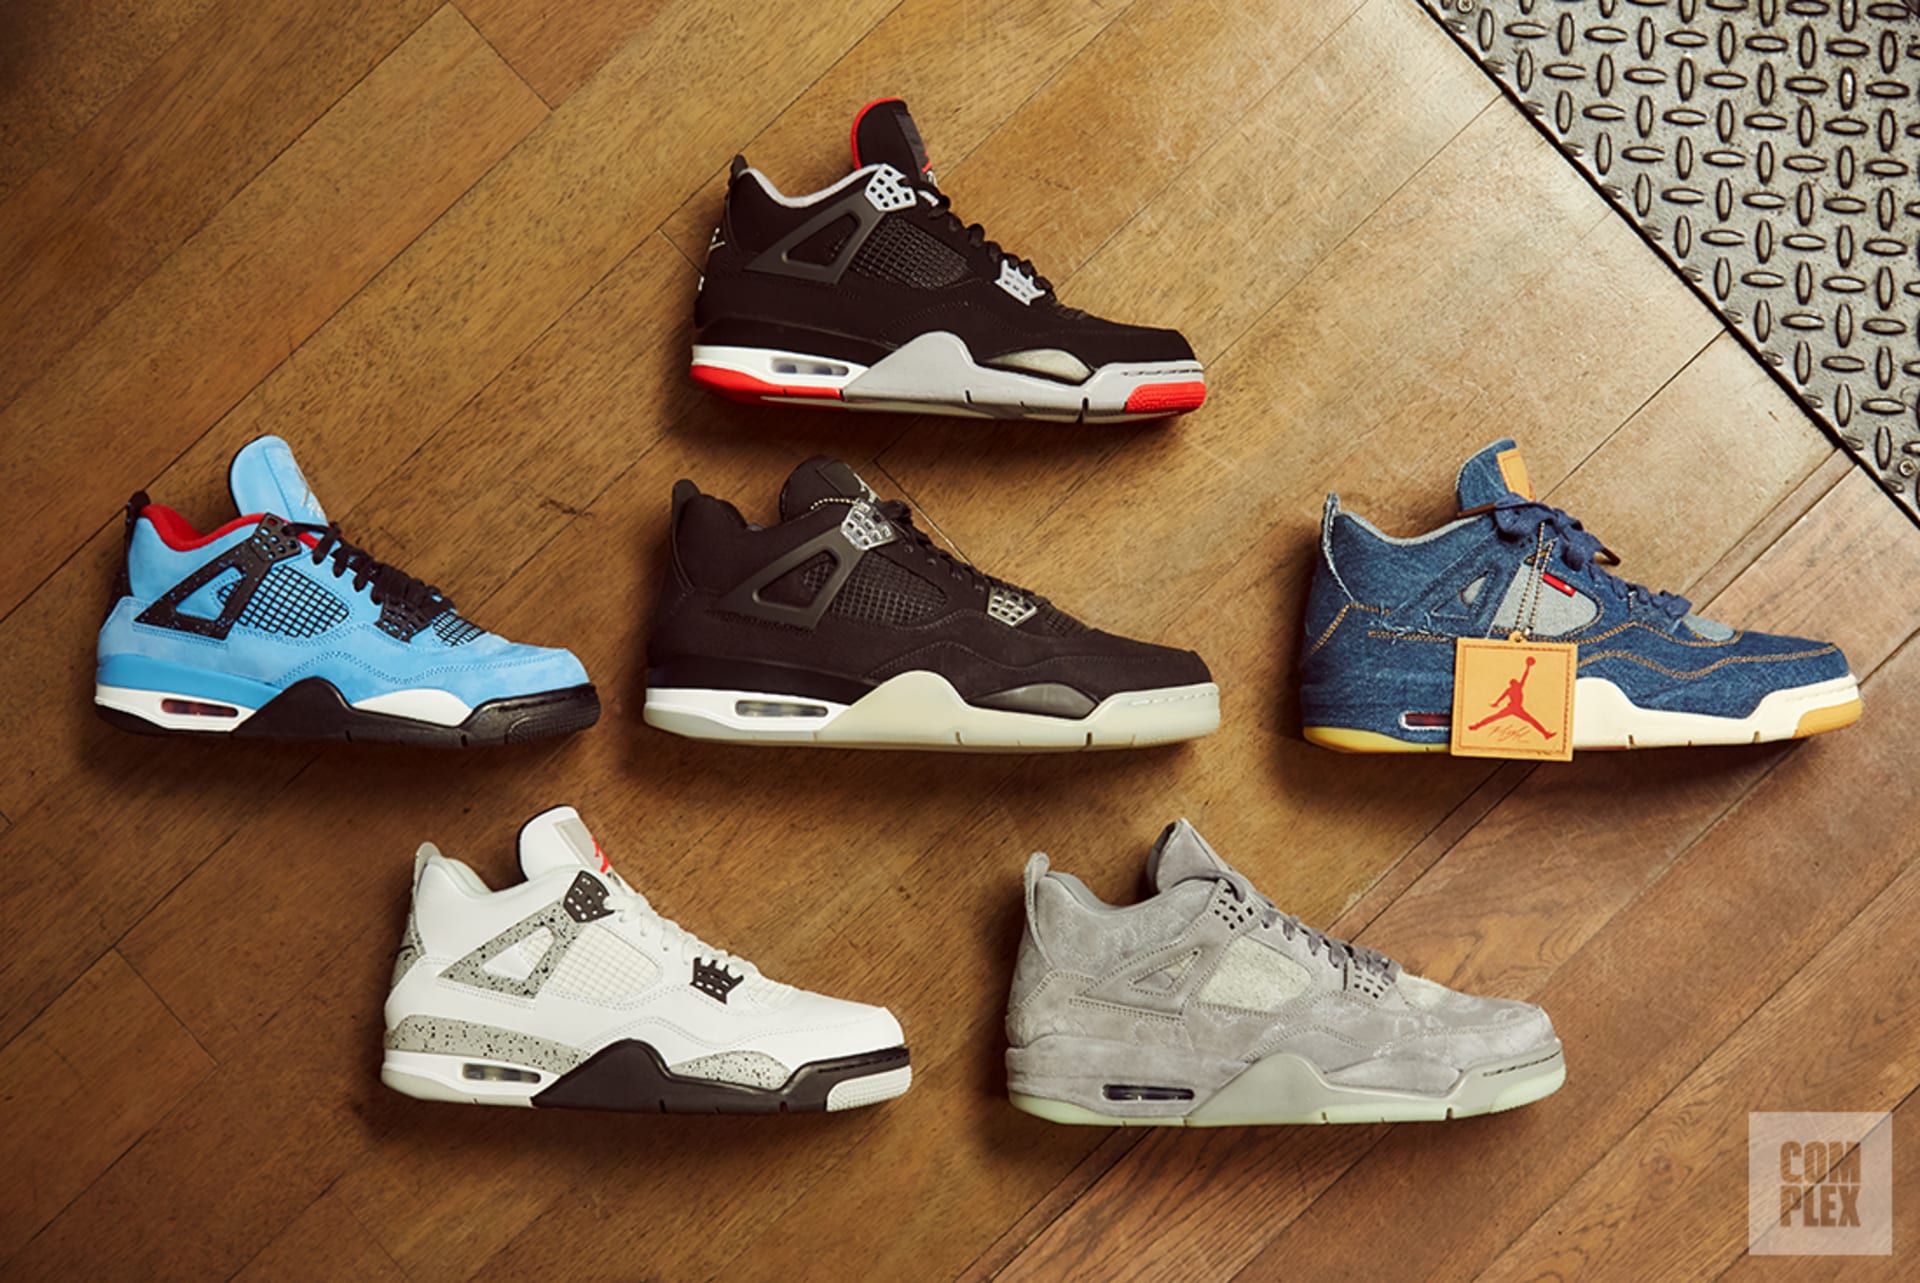 Air Jordan 4: How The Sneaker Became a 